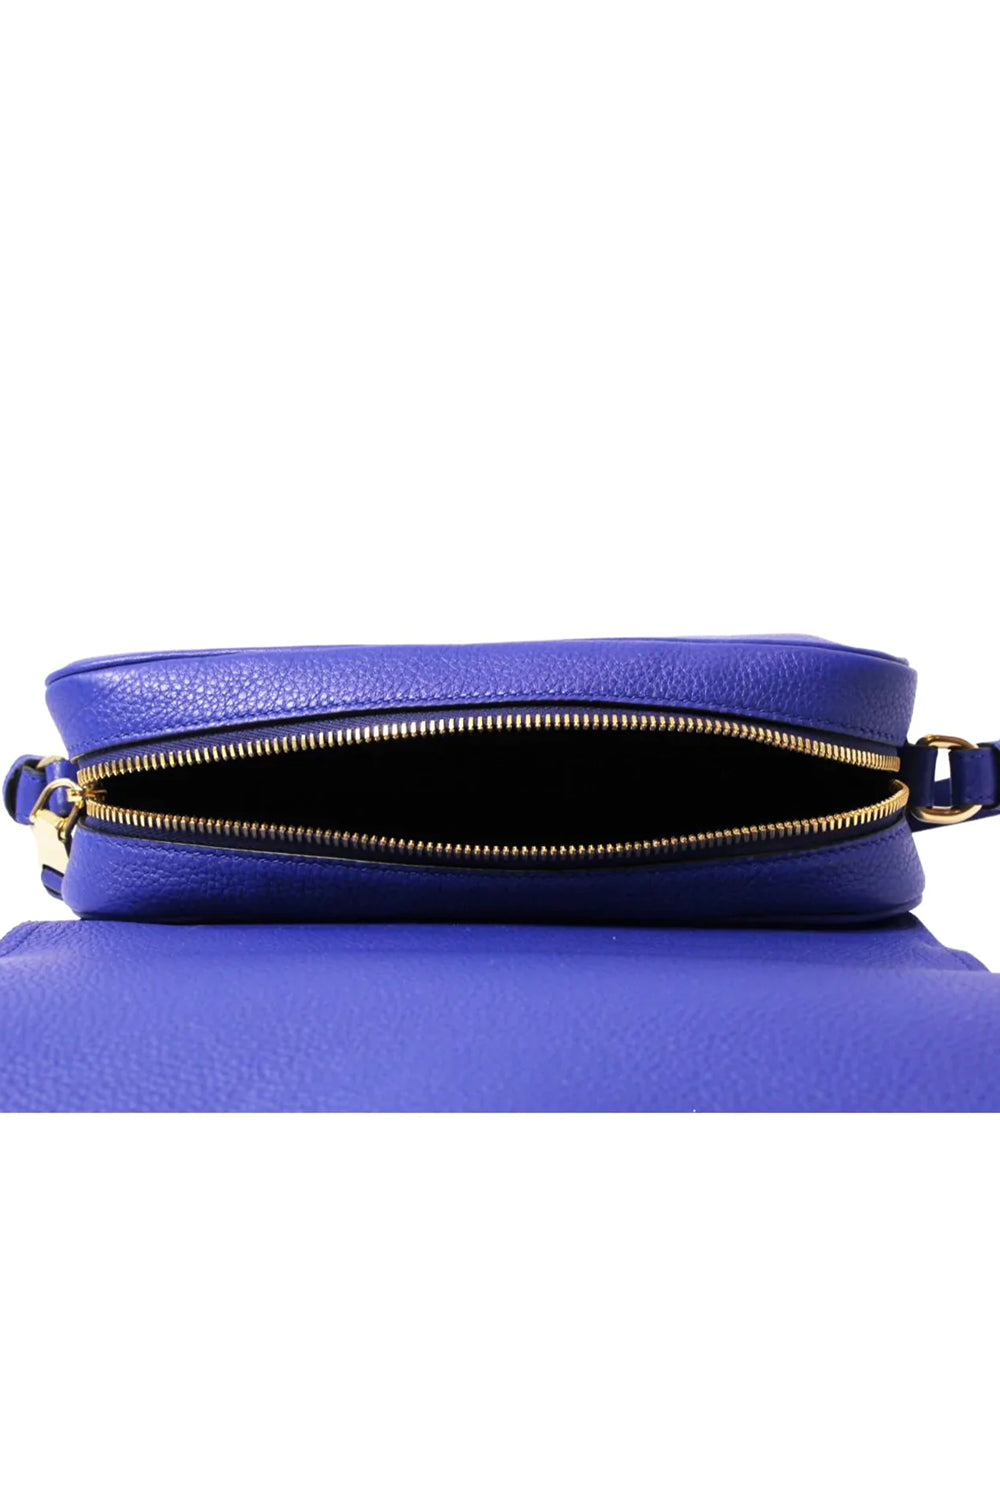 Prada Vitello Phenix Leather Flap Crossbody Bag